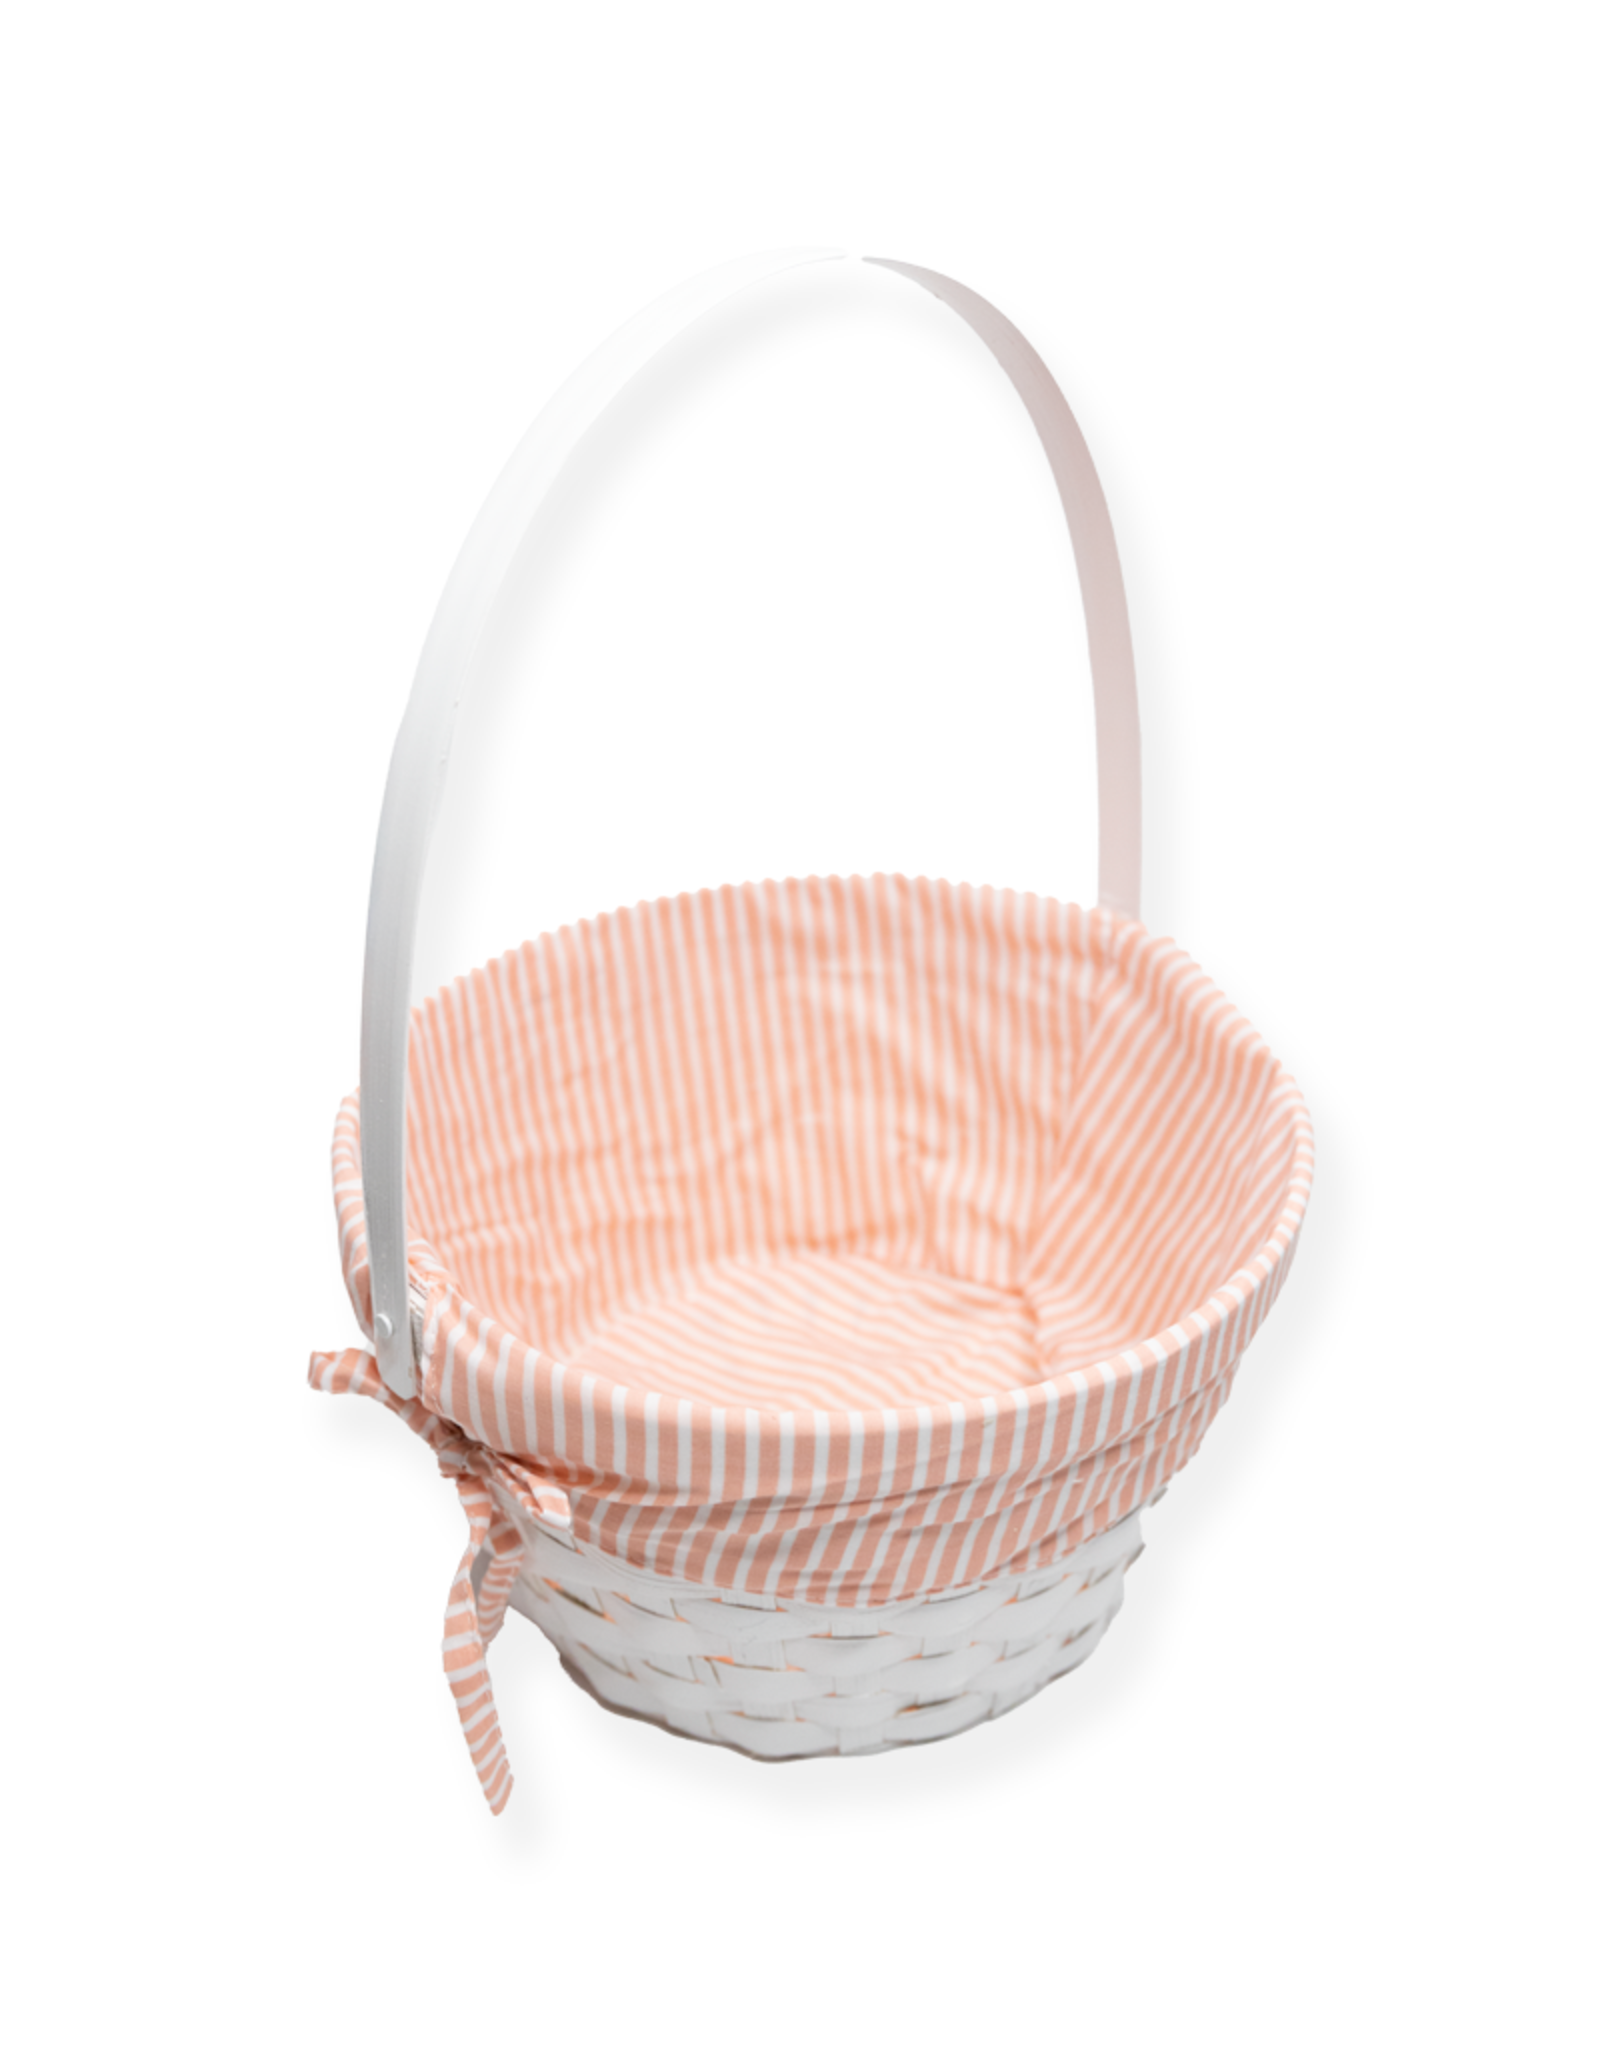 Burton & Burton Lined Easter Basket w/ Embroidery Peach Stripe